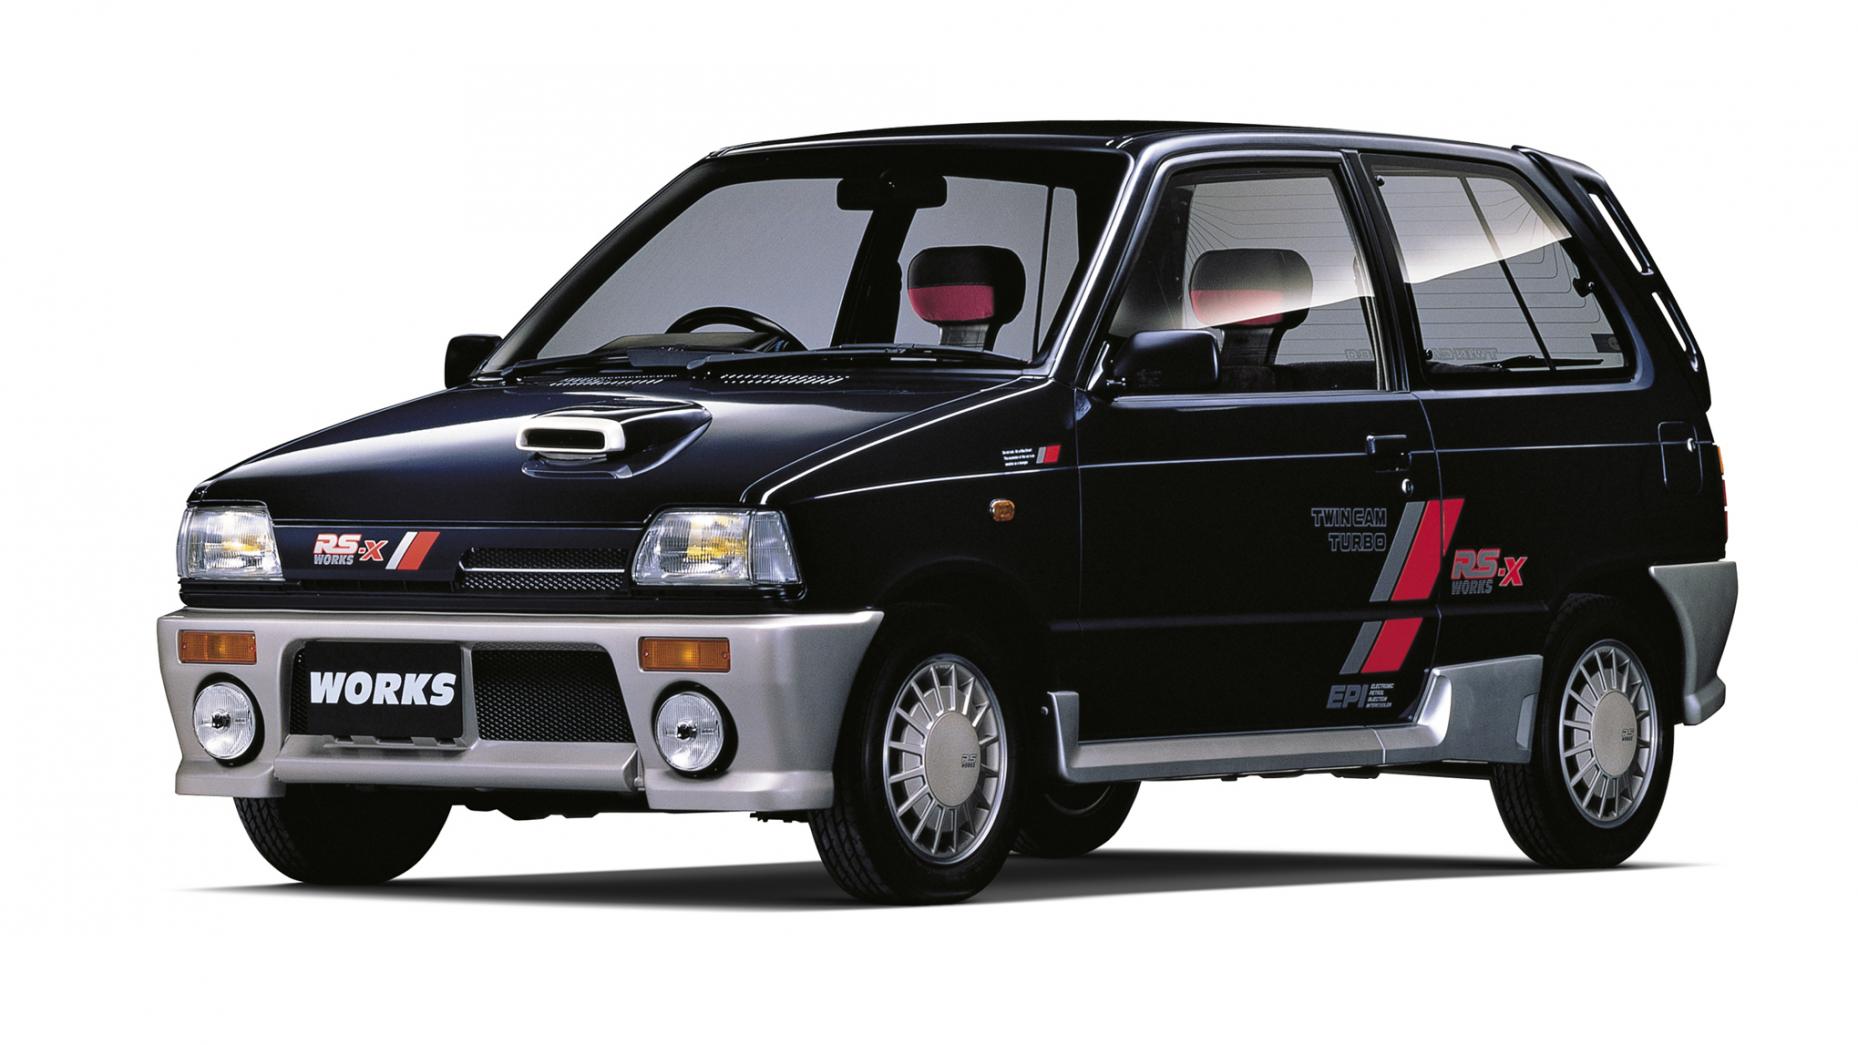 3. Suzuki Alto Works